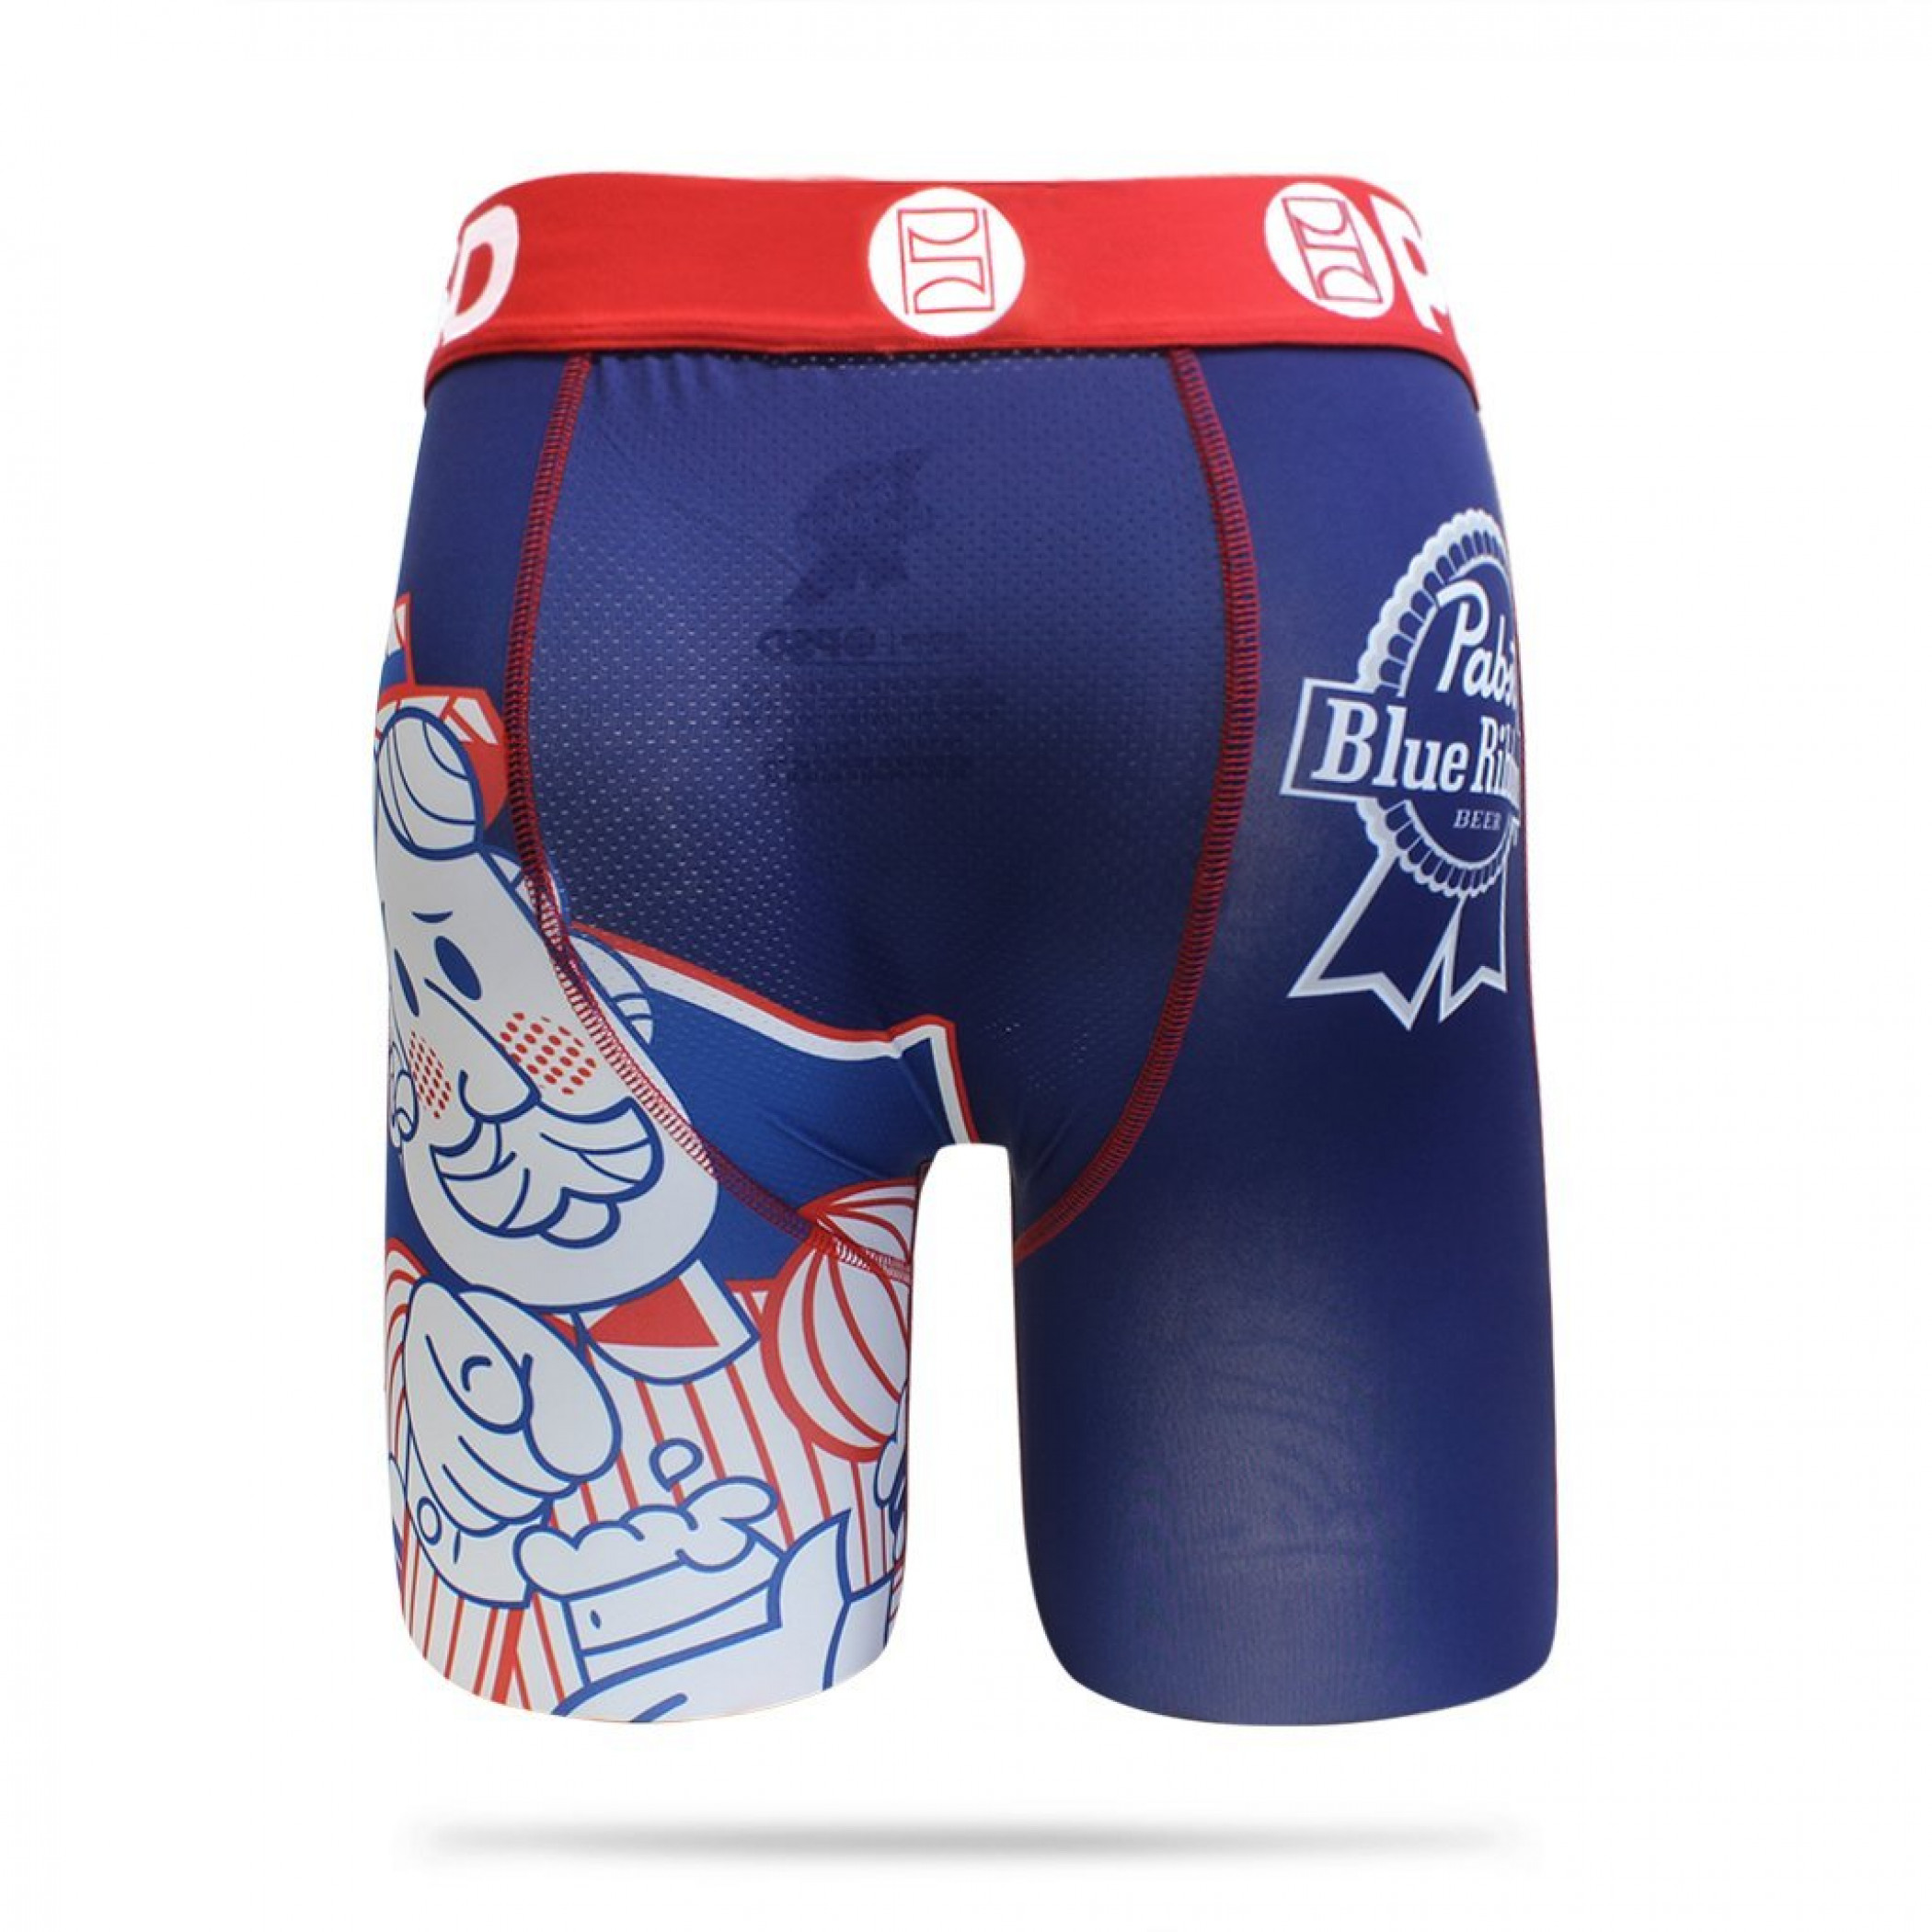 Pabst Blue Ribbon Beer Mascot Boxer Briefs